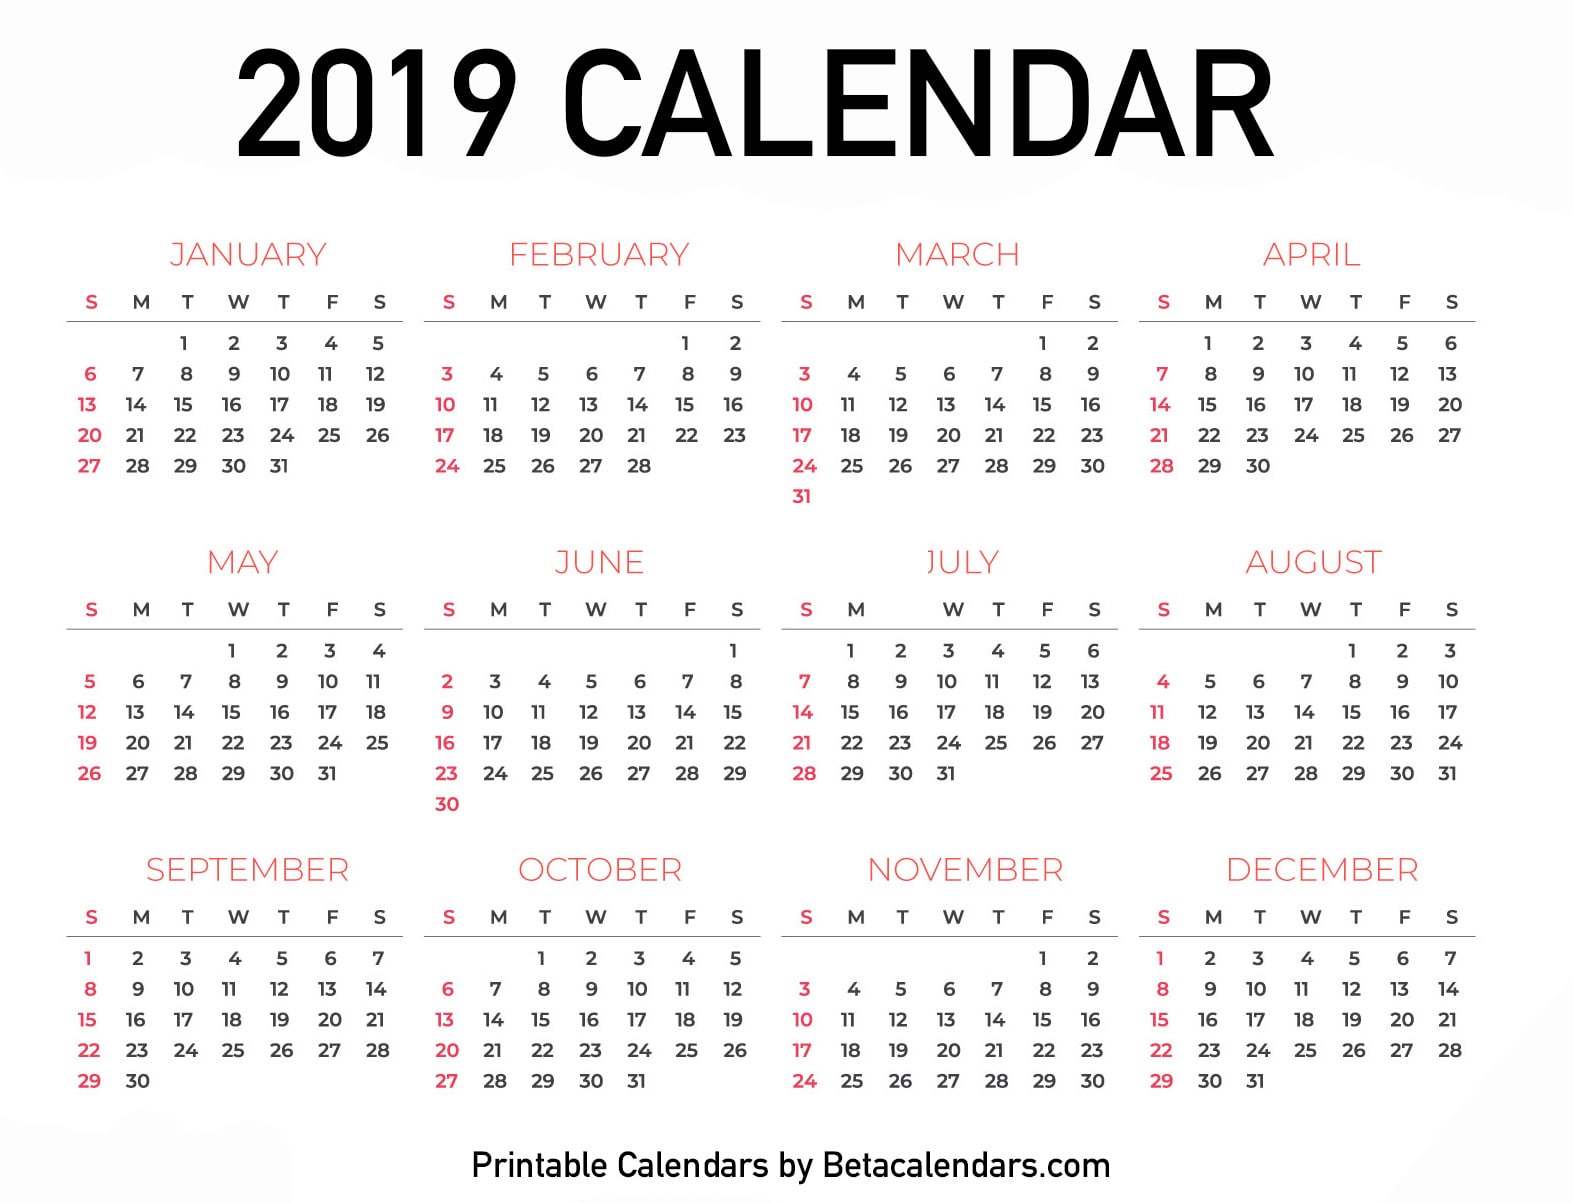 2019-calendar-beta-calendars